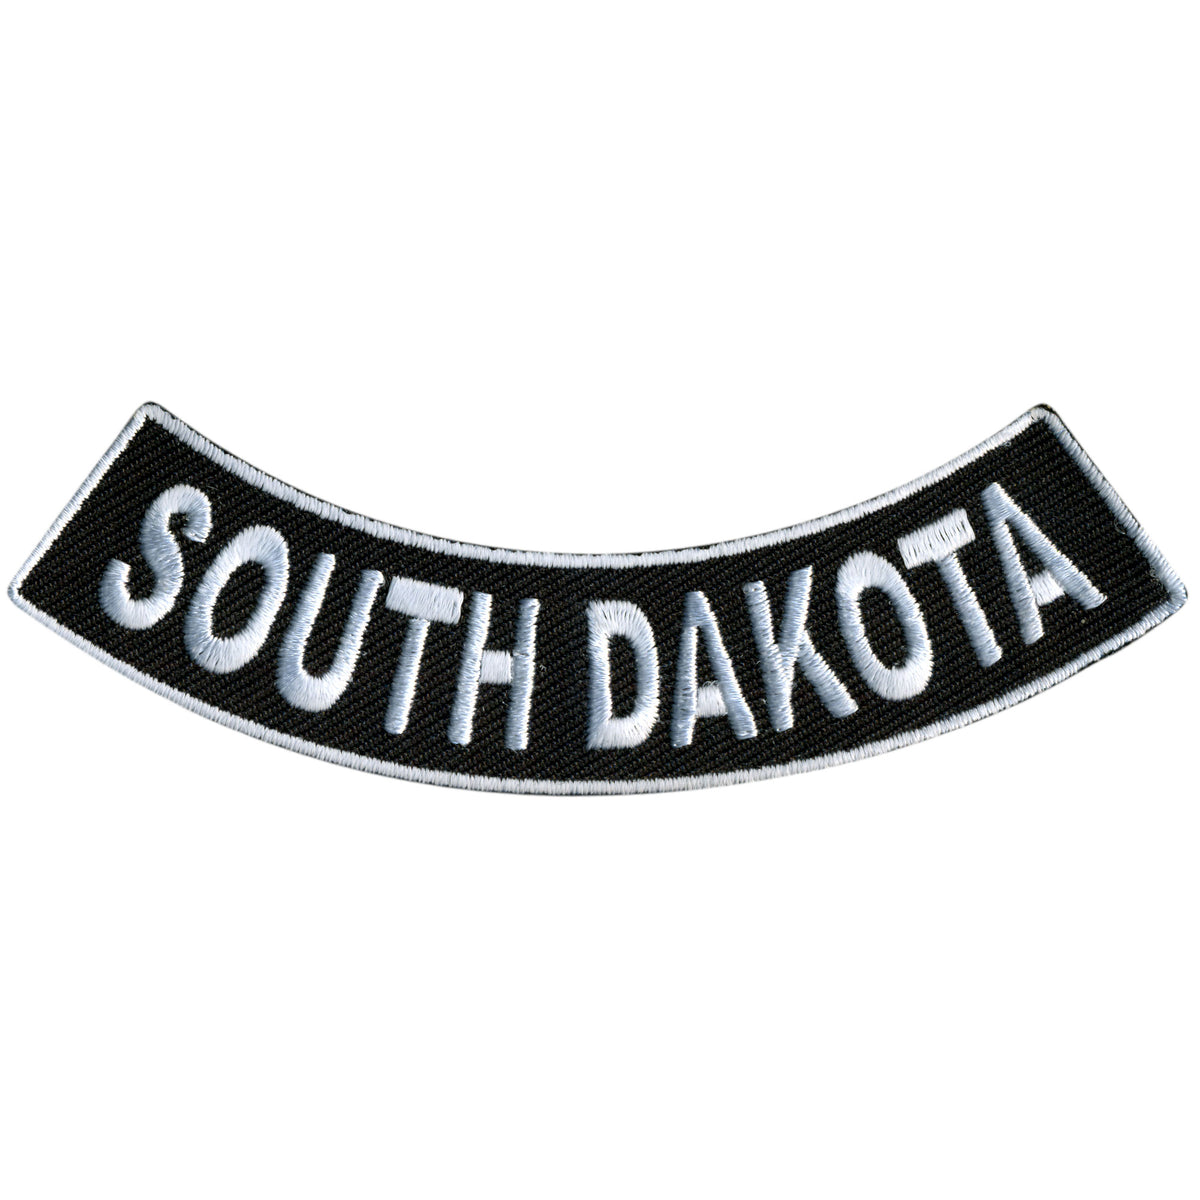 Hot Leathers South Dakota 4” X 1” Bottom Rocker Patch